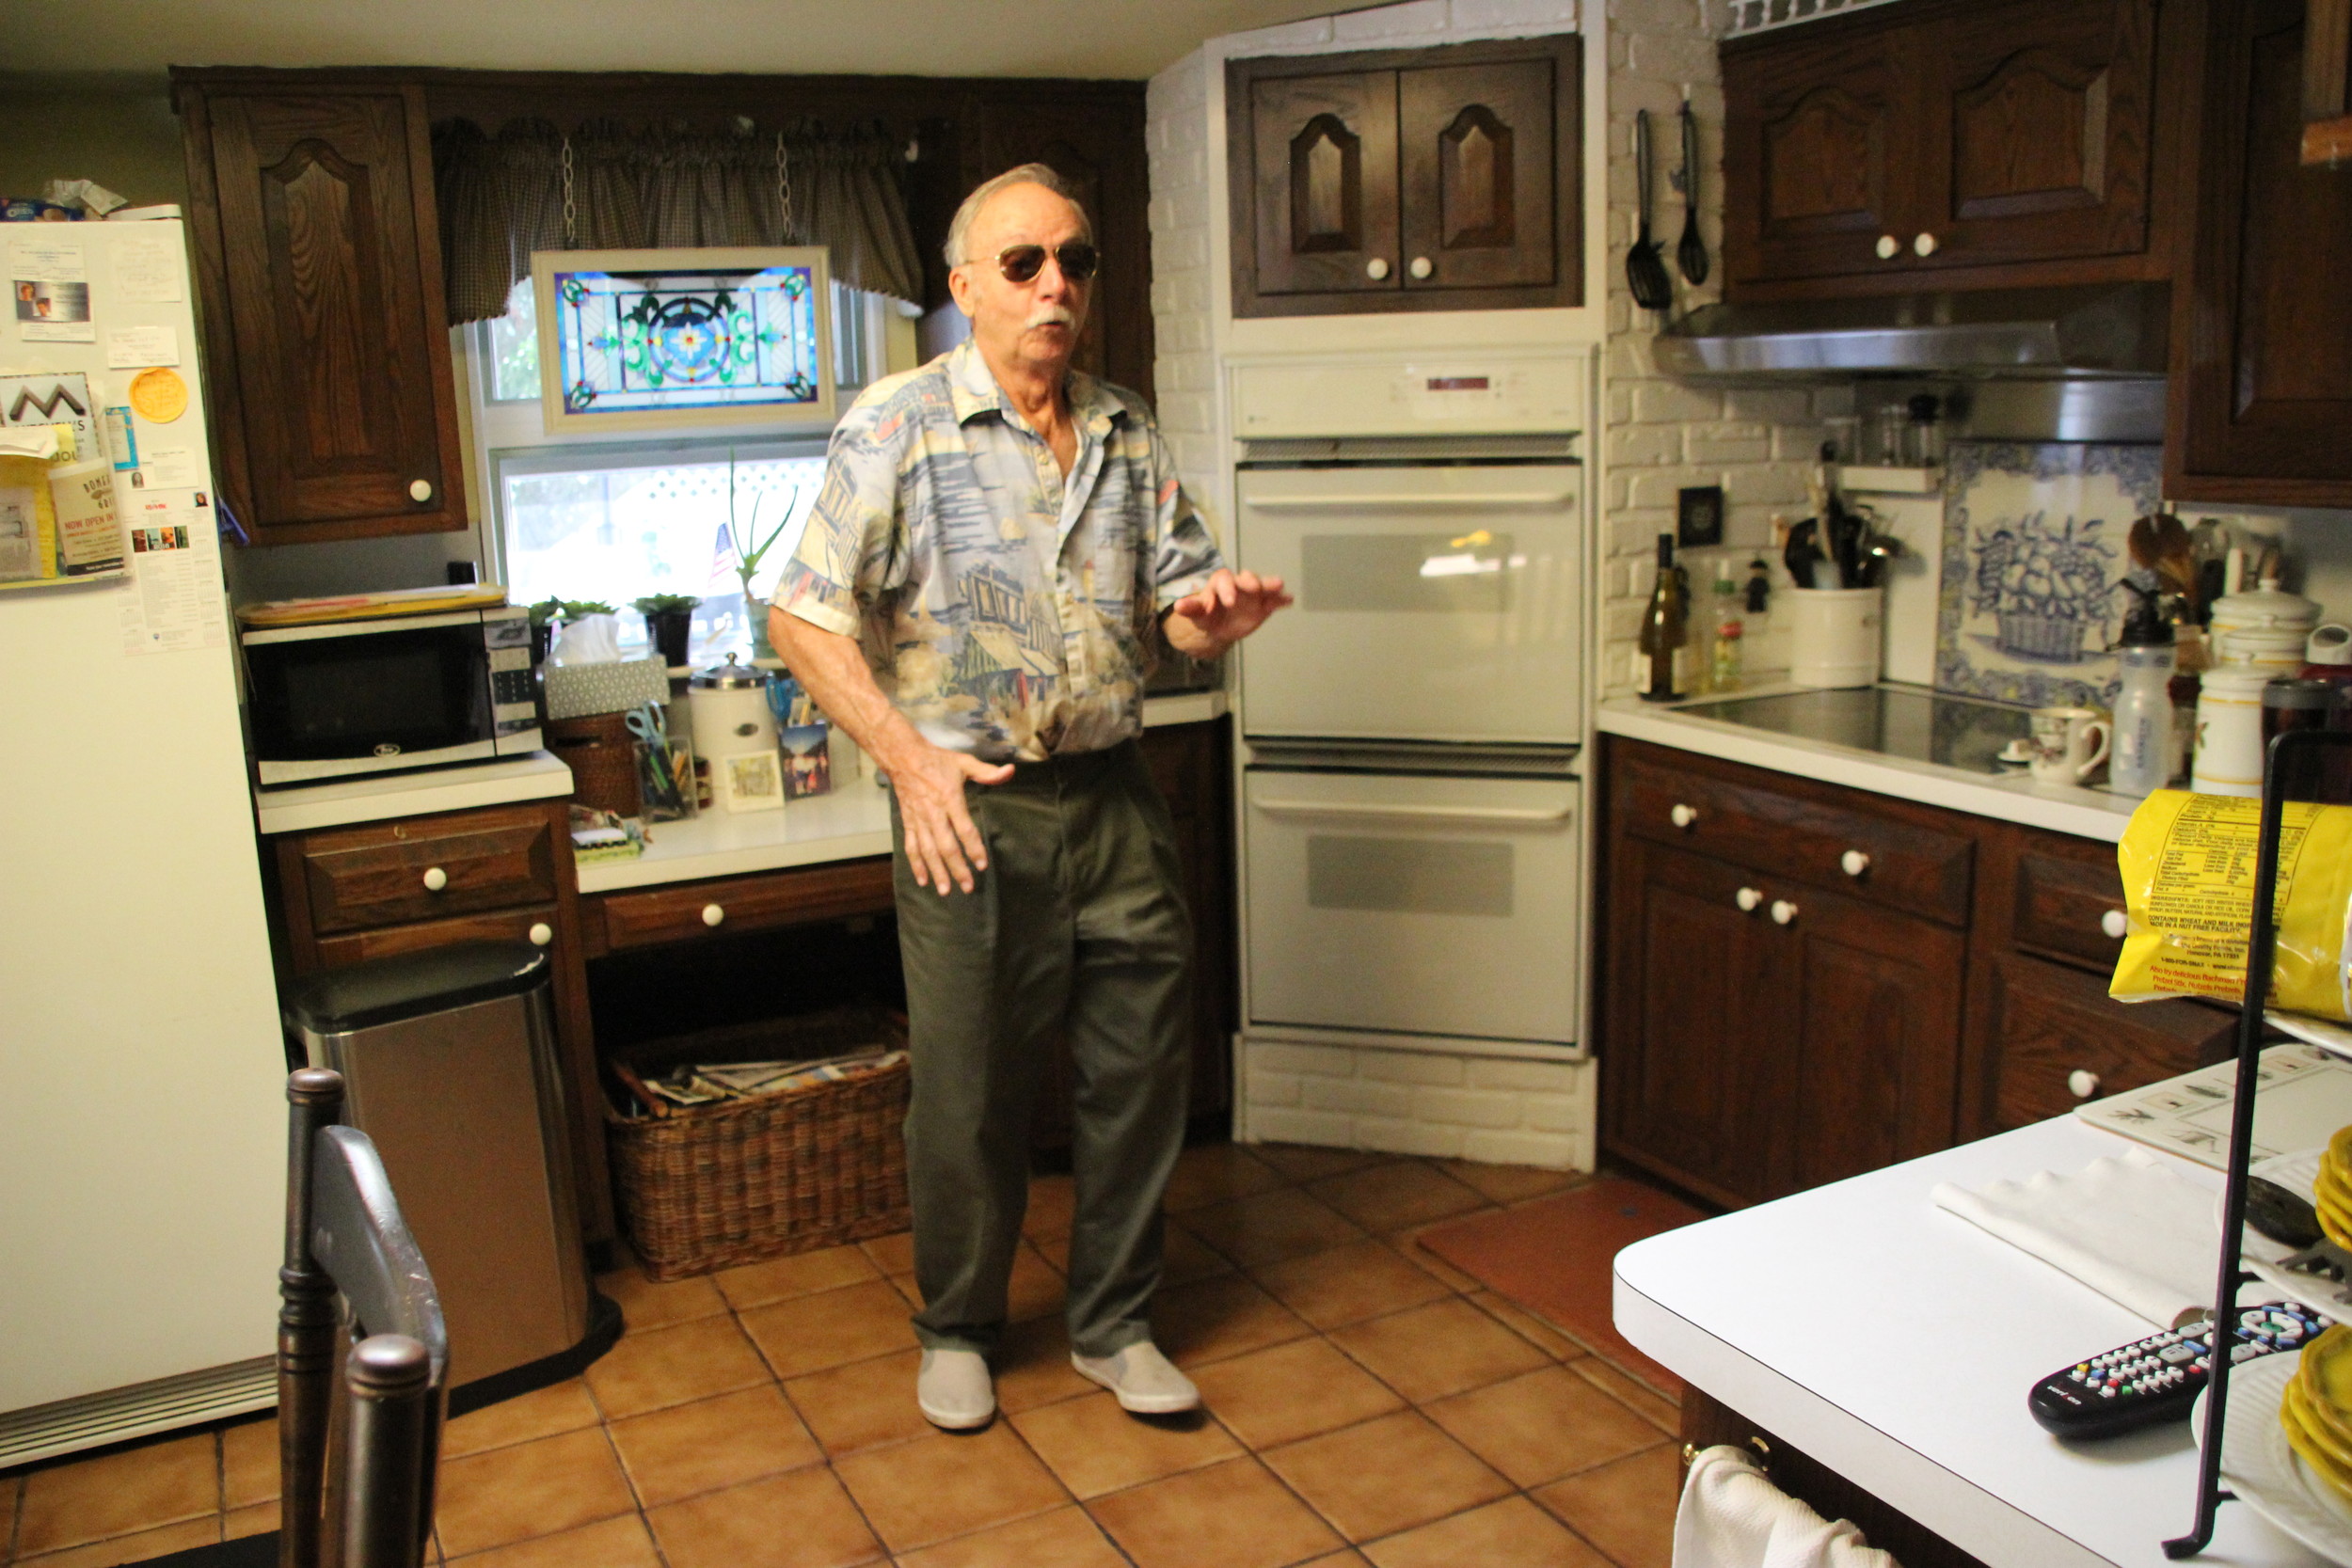 Ferrara demonstrated salsa technique in his kitchen.